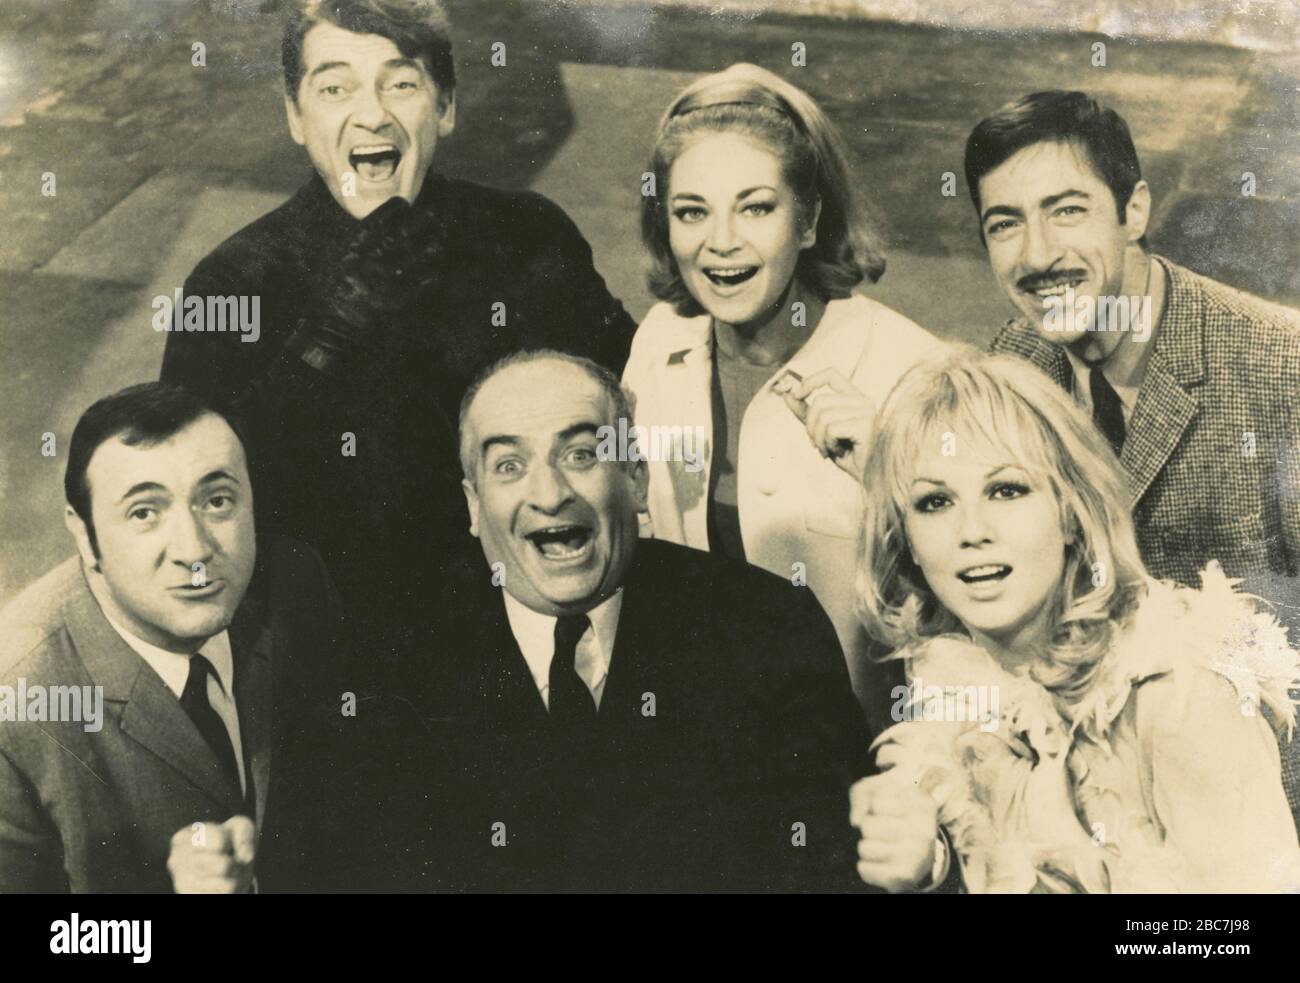 Attori francesi Louis De Funès, Jean Marais, Mylène Demongeot, e Mino Doro nel film Fantomas Vs. Scozia Yard, Francia 1967 Foto Stock